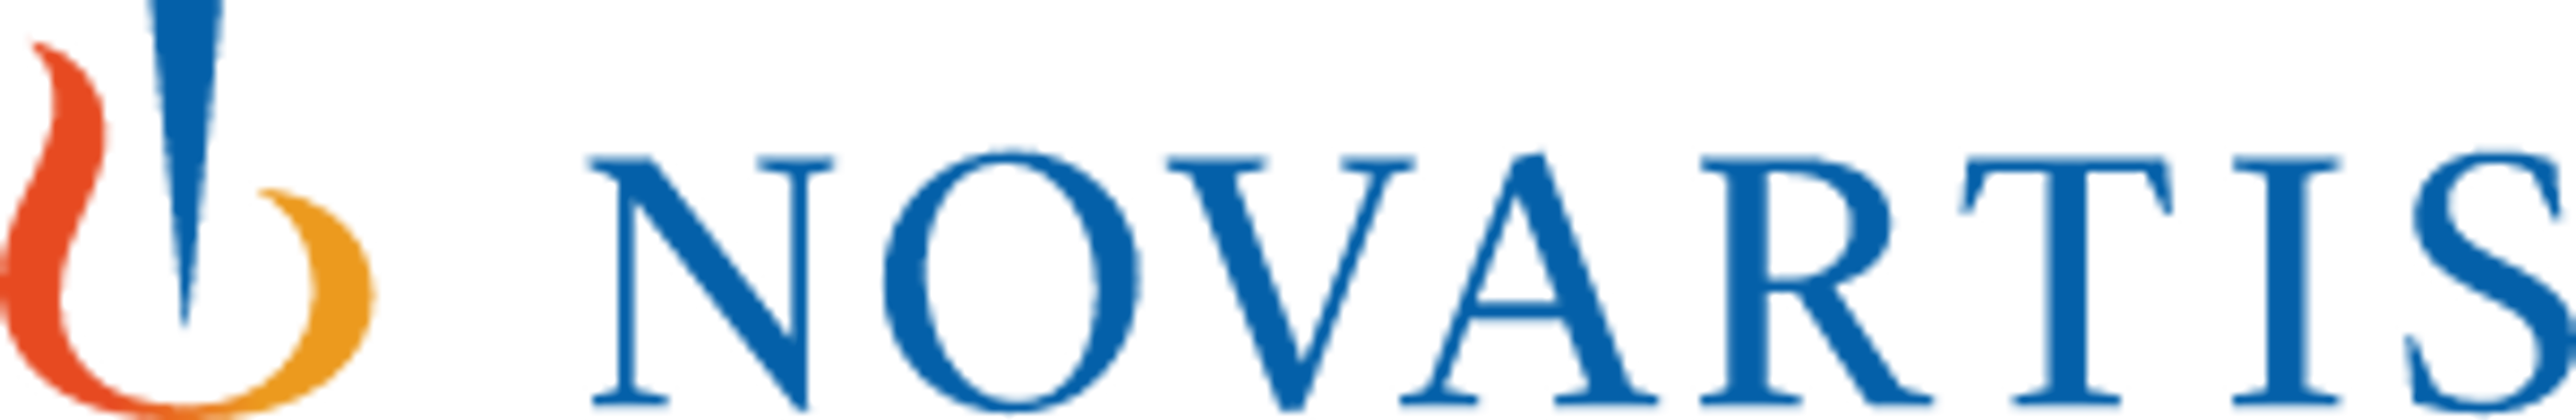 Novartis logo.png